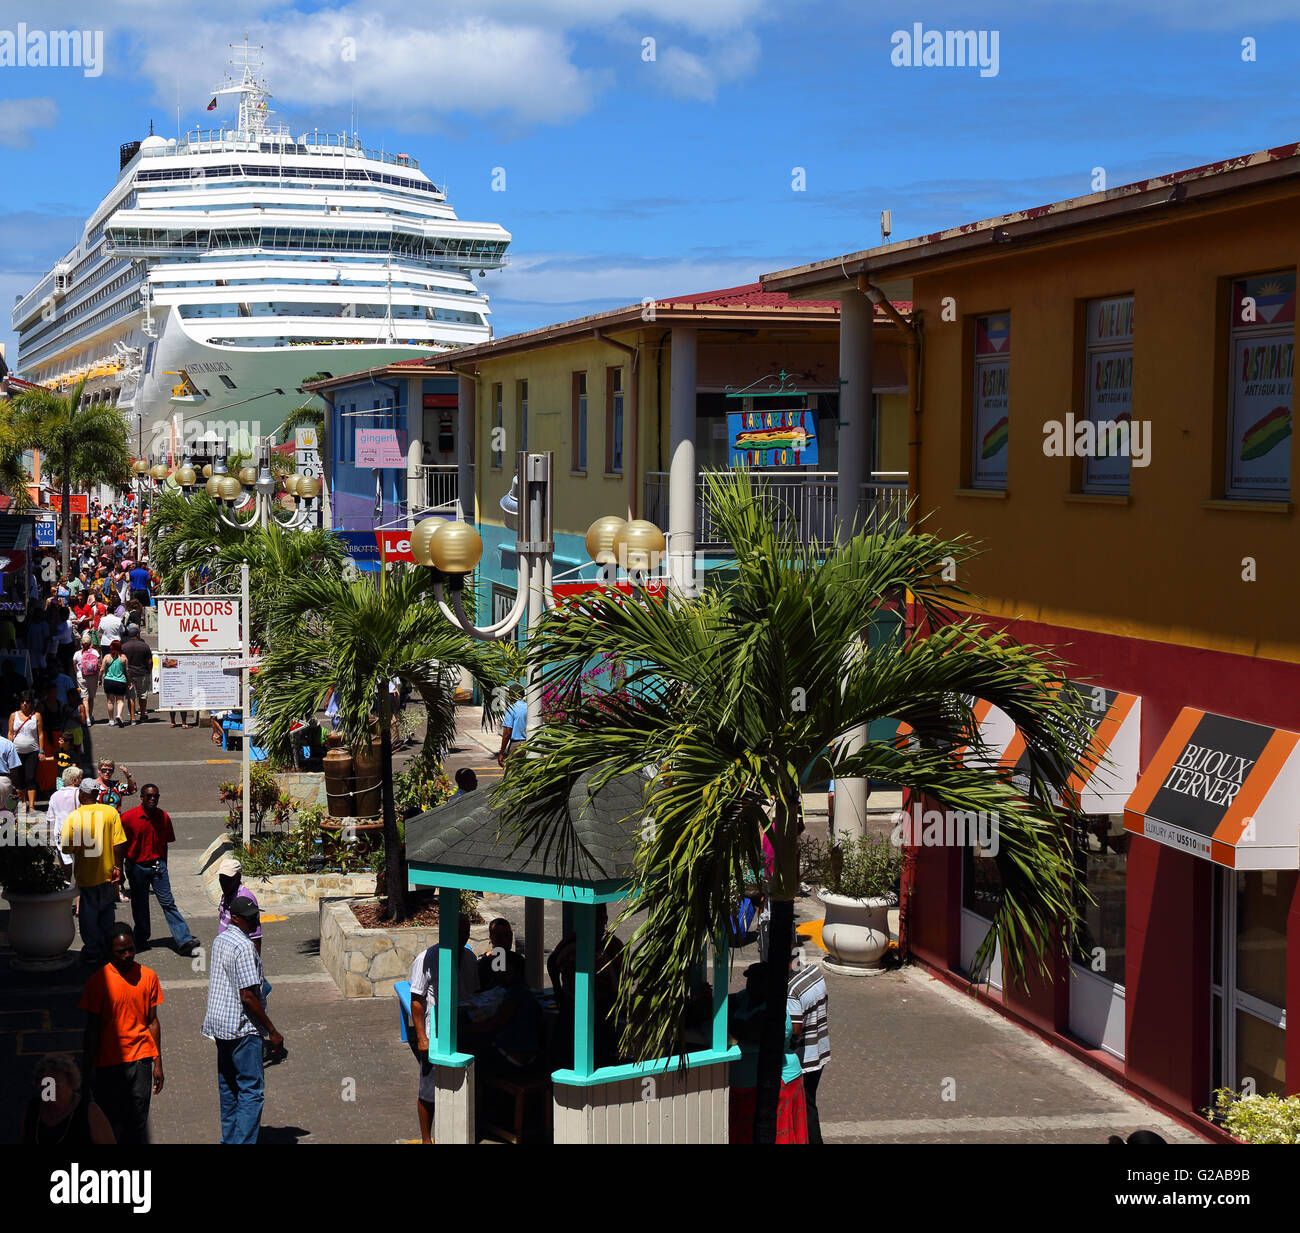 Costa Magica cruise ship docked in port, St John's, Antigua Stock Photo